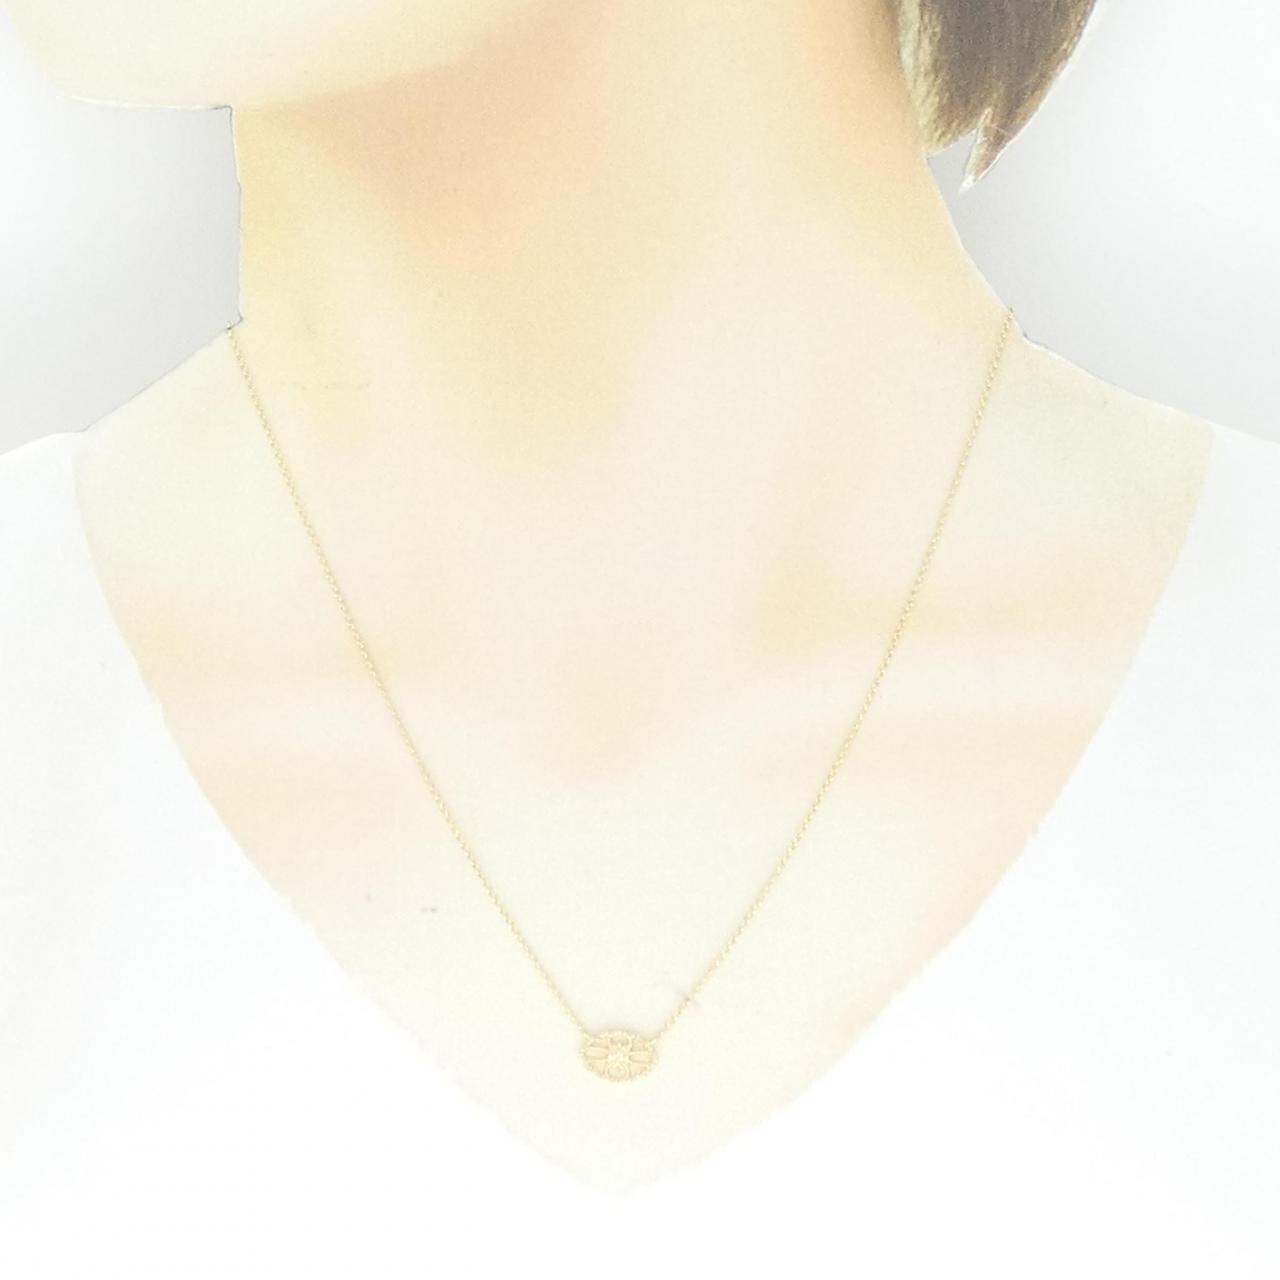 Agete Diamond necklace 0.01CT